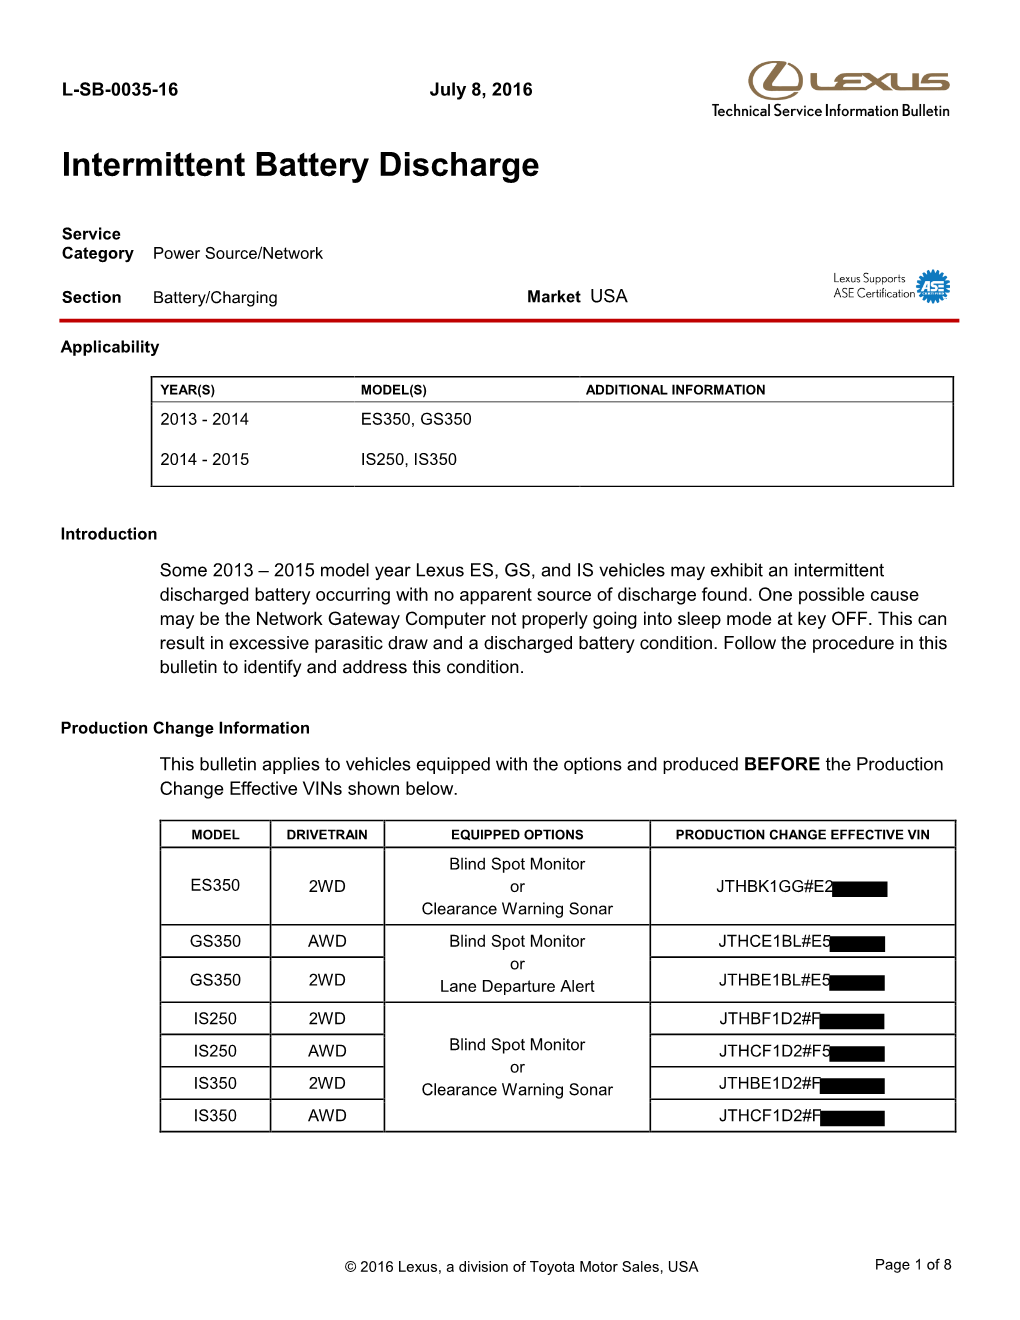 Intermittent Battery Discharge